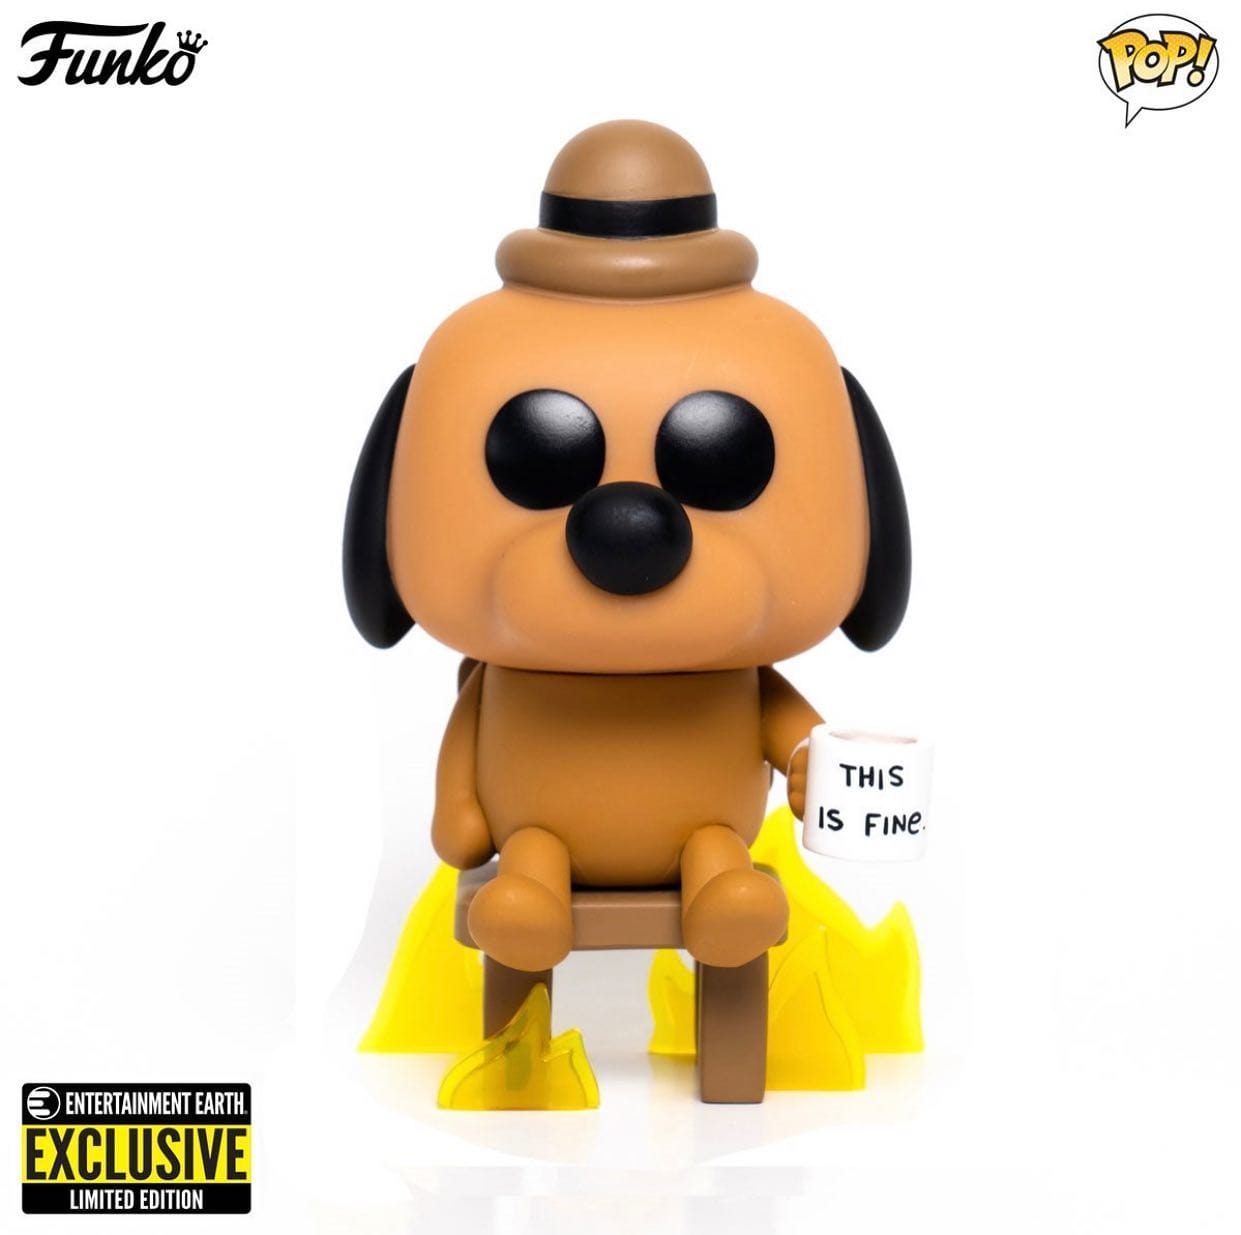 [Pre-venta] Funko Pop! This is fine Dog exclusivo de Entertainment Earth